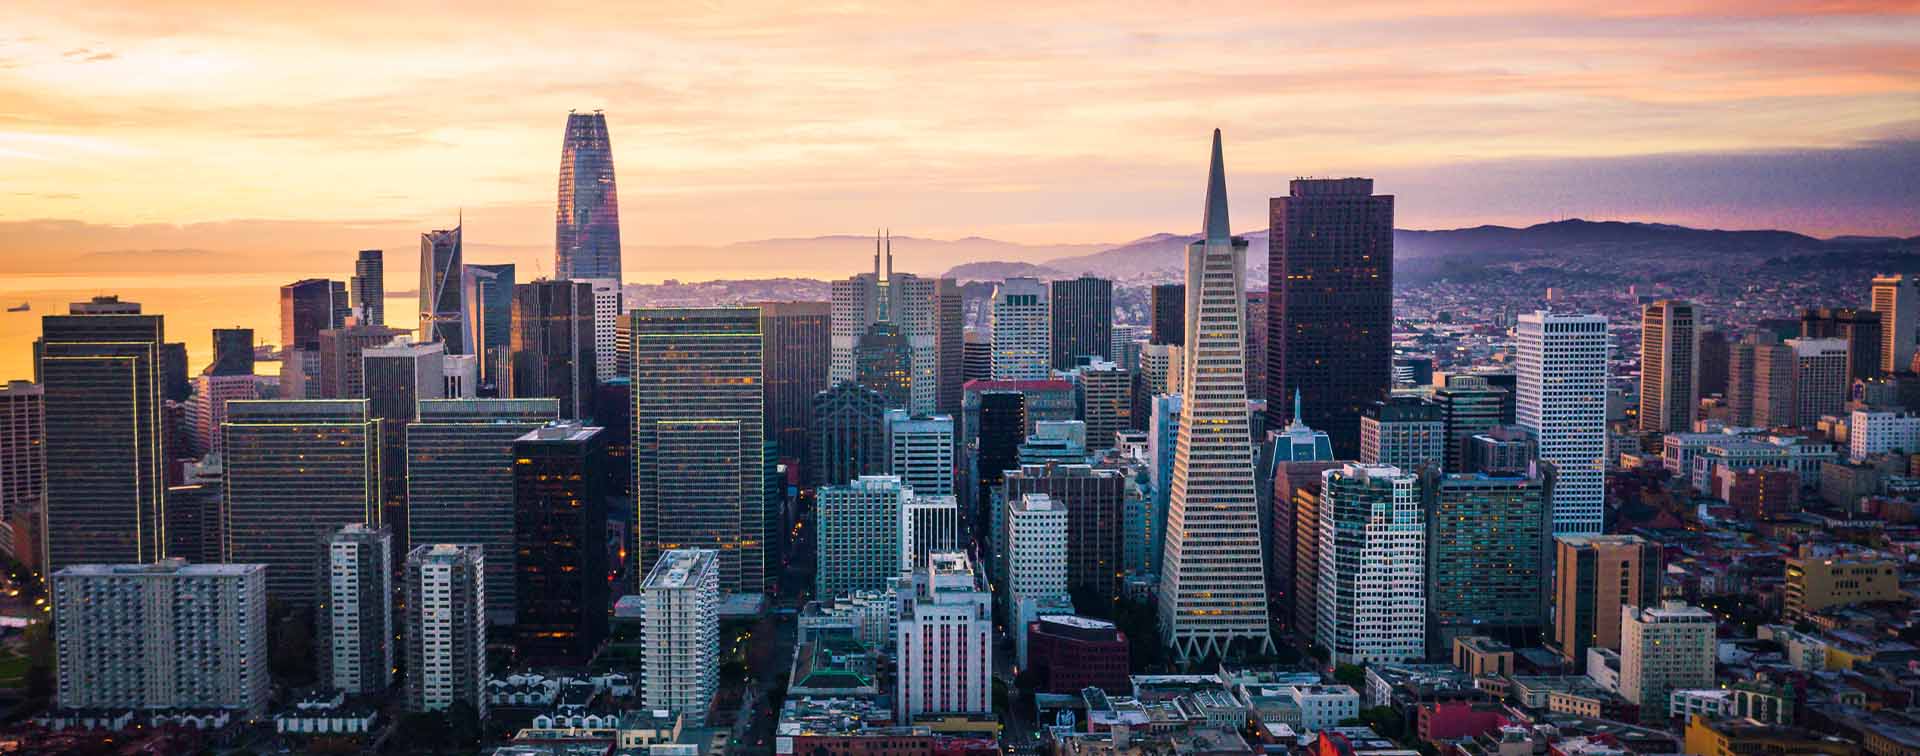 The San Francisco skyline at sunrise